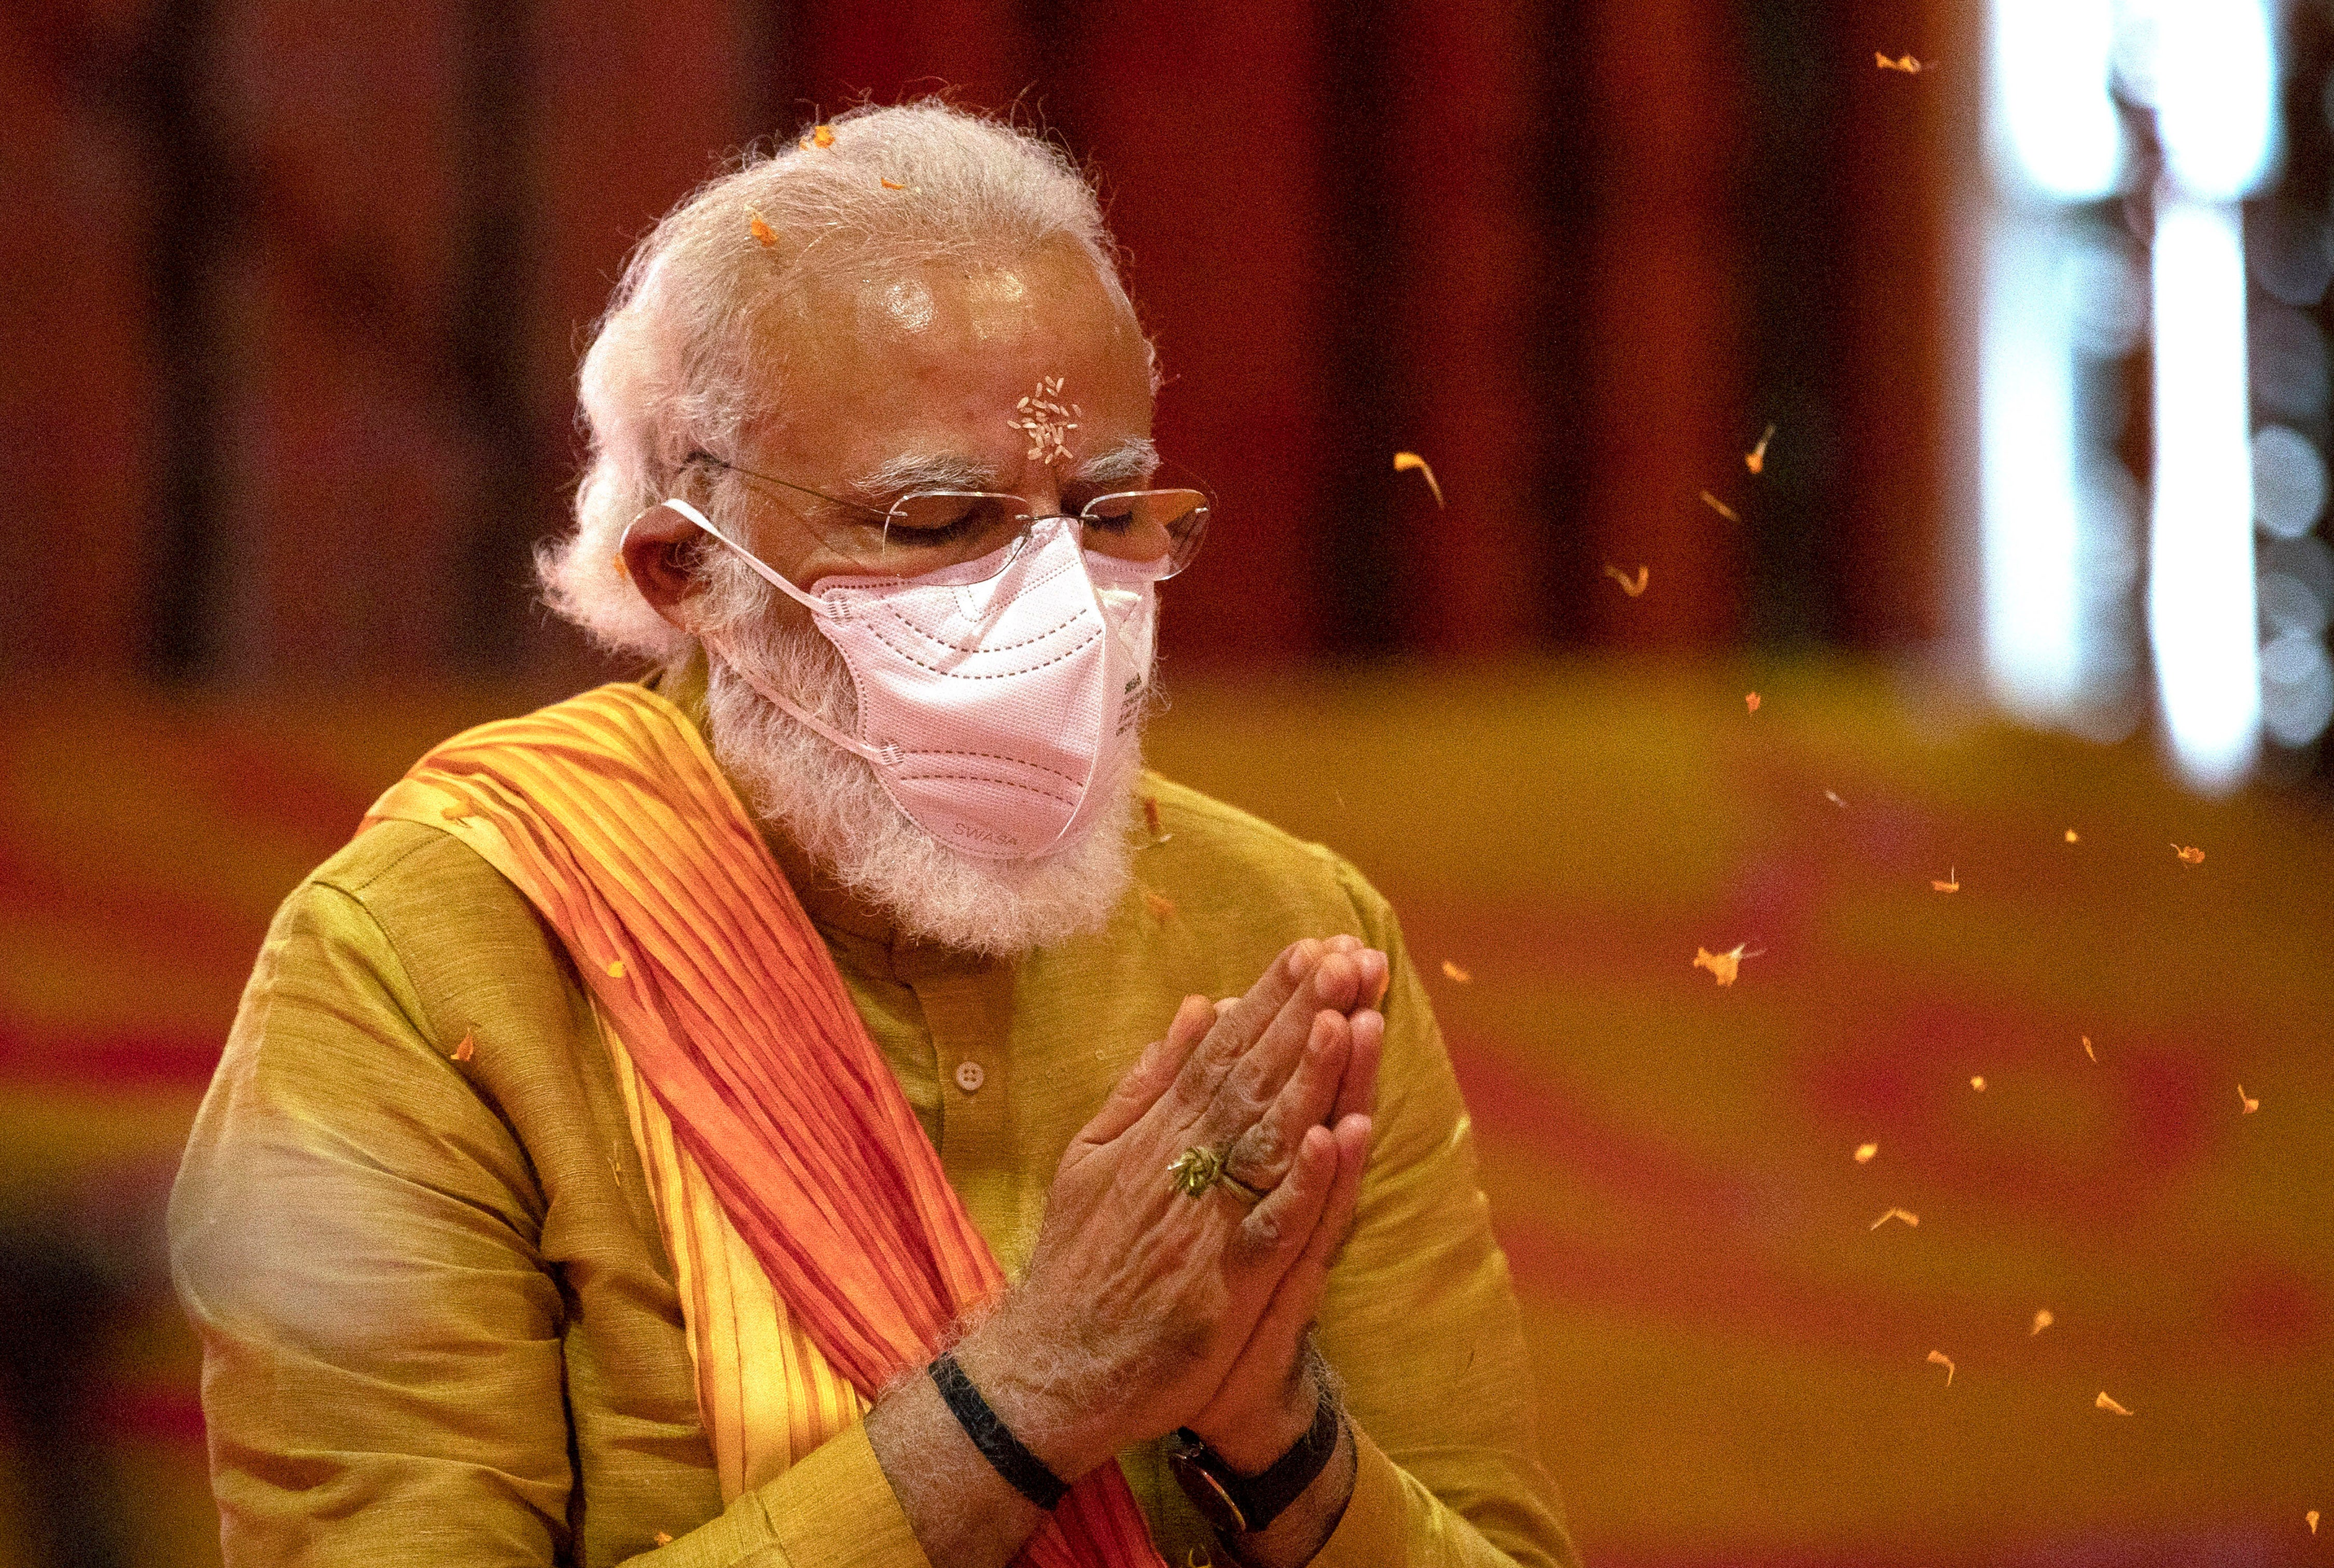 Indian PM Modi will be inaugurating the temple in Ayodhya, Uttar Pradesh